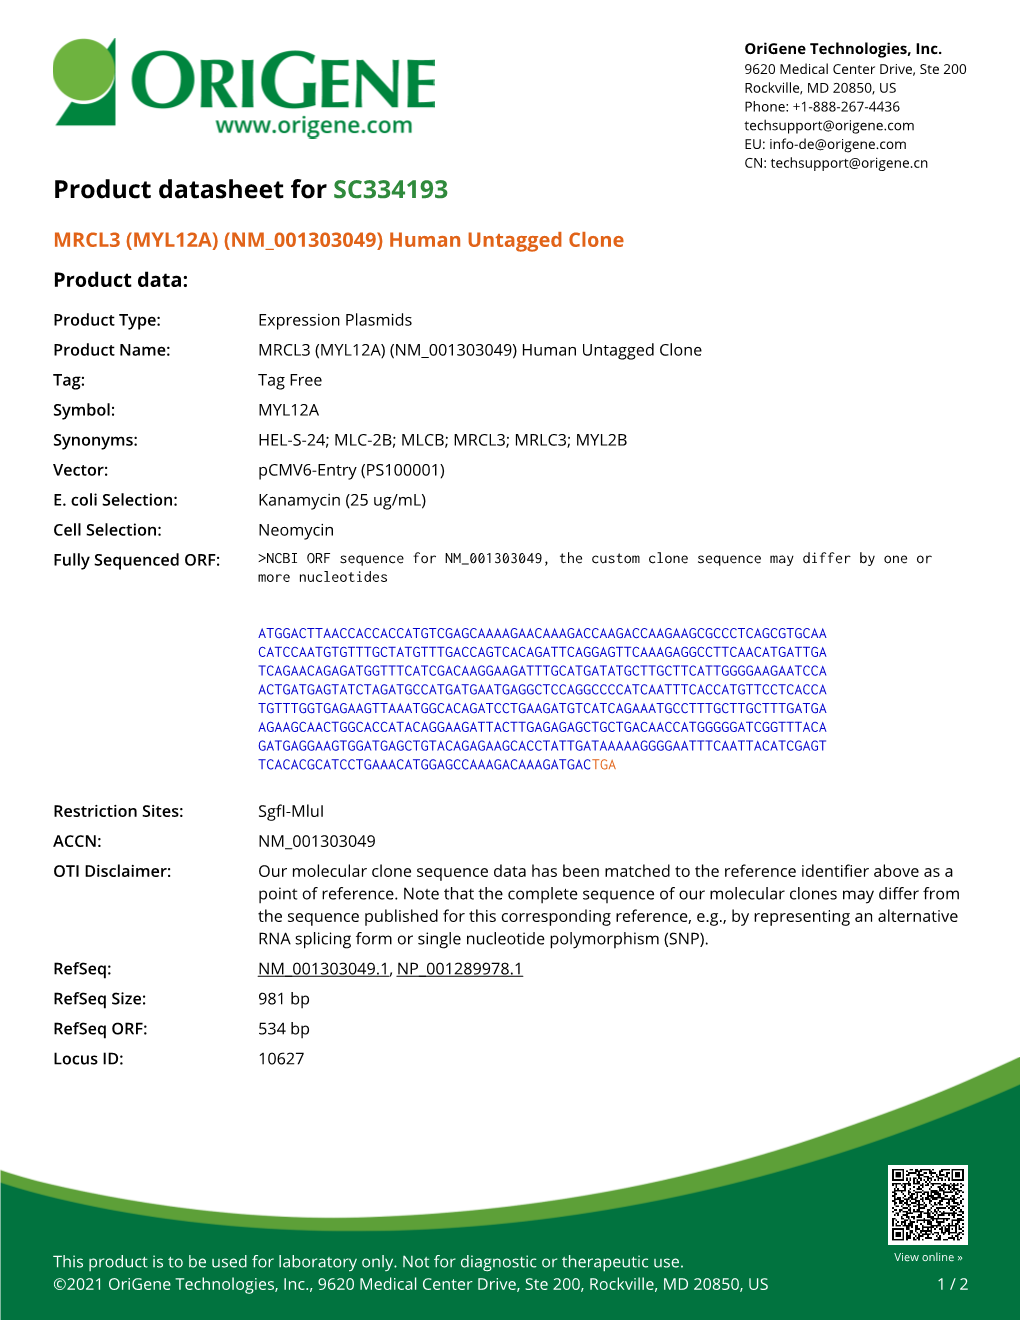 MRCL3 (MYL12A) (NM 001303049) Human Untagged Clone Product Data